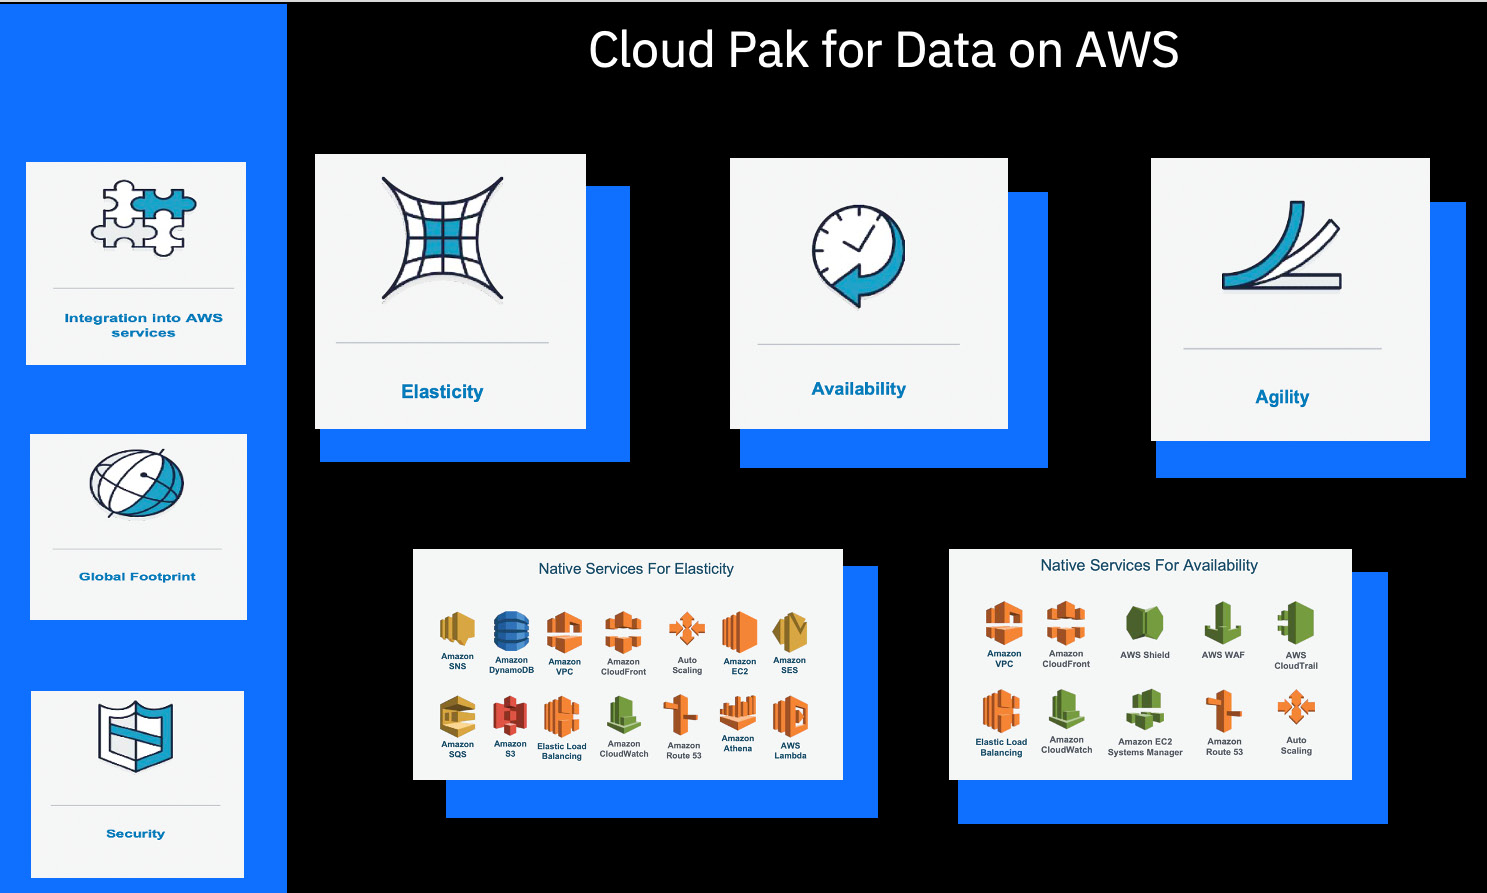 Figure 6.2 – Cloud Pak for Data on AWS – value proposition
